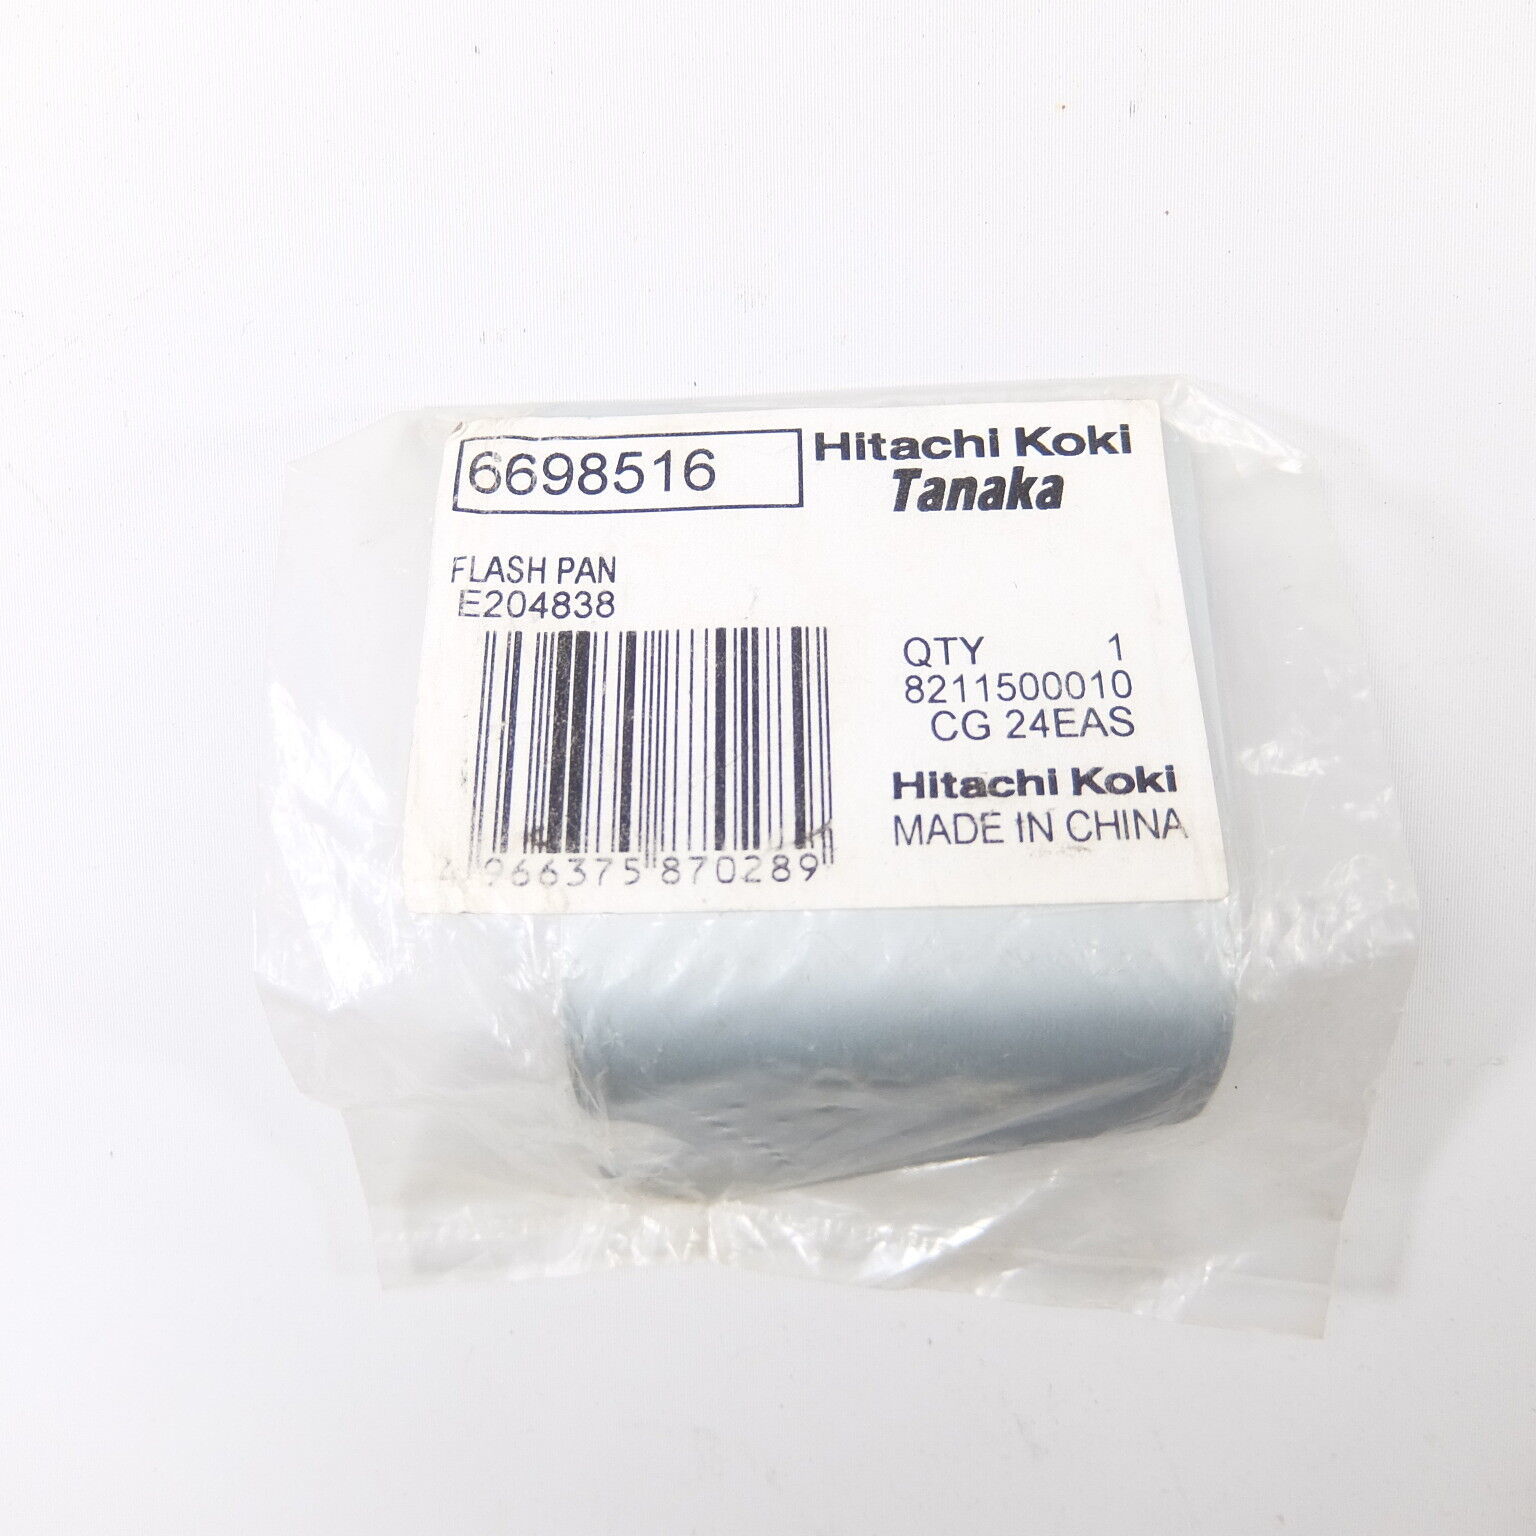 New OEM Tanaka 6698516 Flash Pan Shield for Tanaka String Trimmer - $2.00